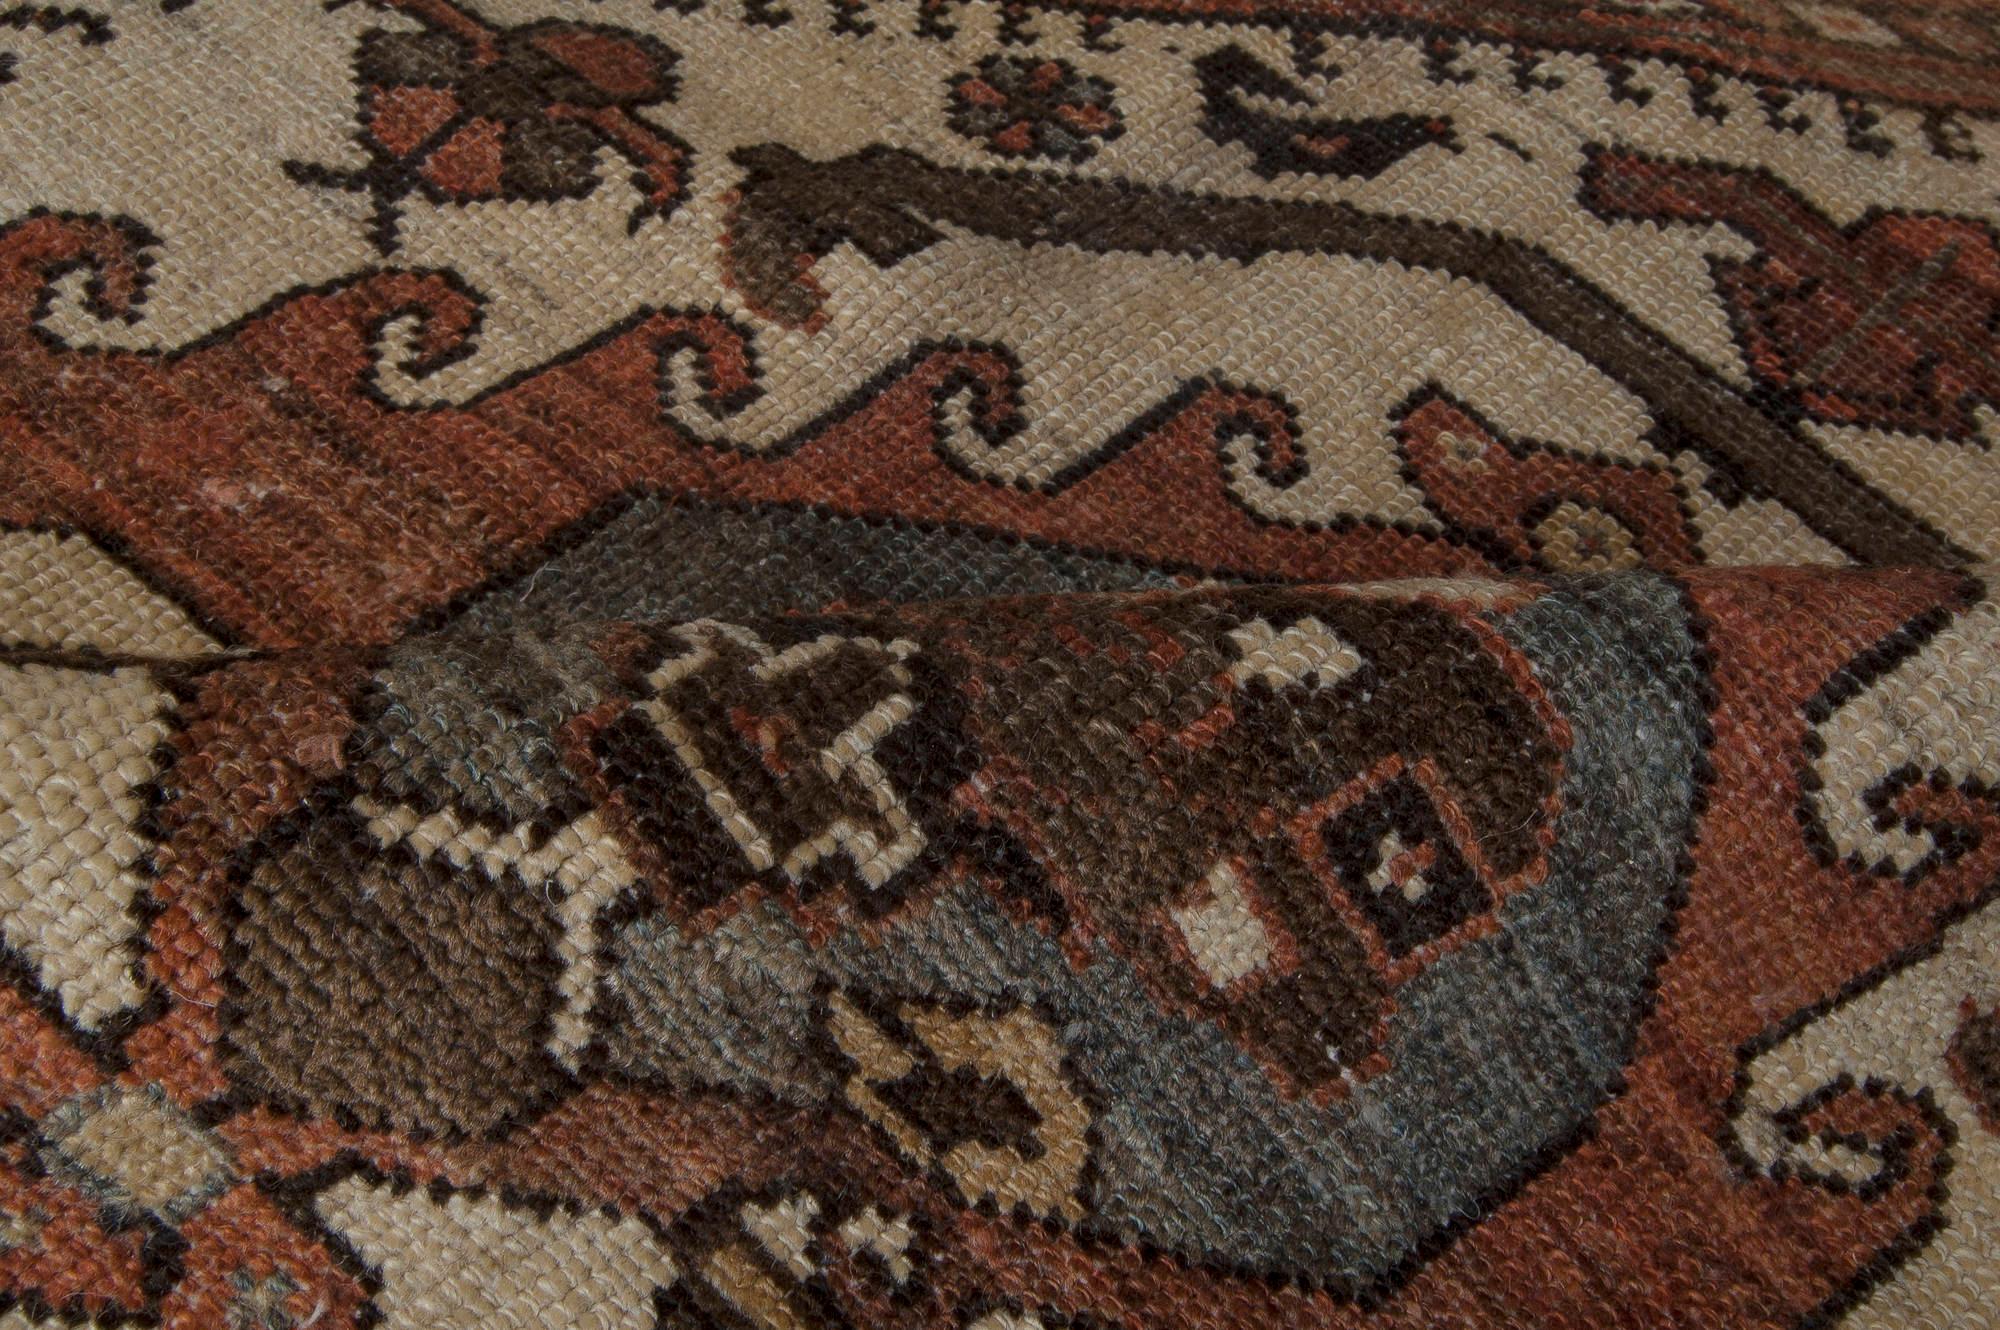 Authentic Persian Bakhtiari handmade wool rug
Size: 13'1